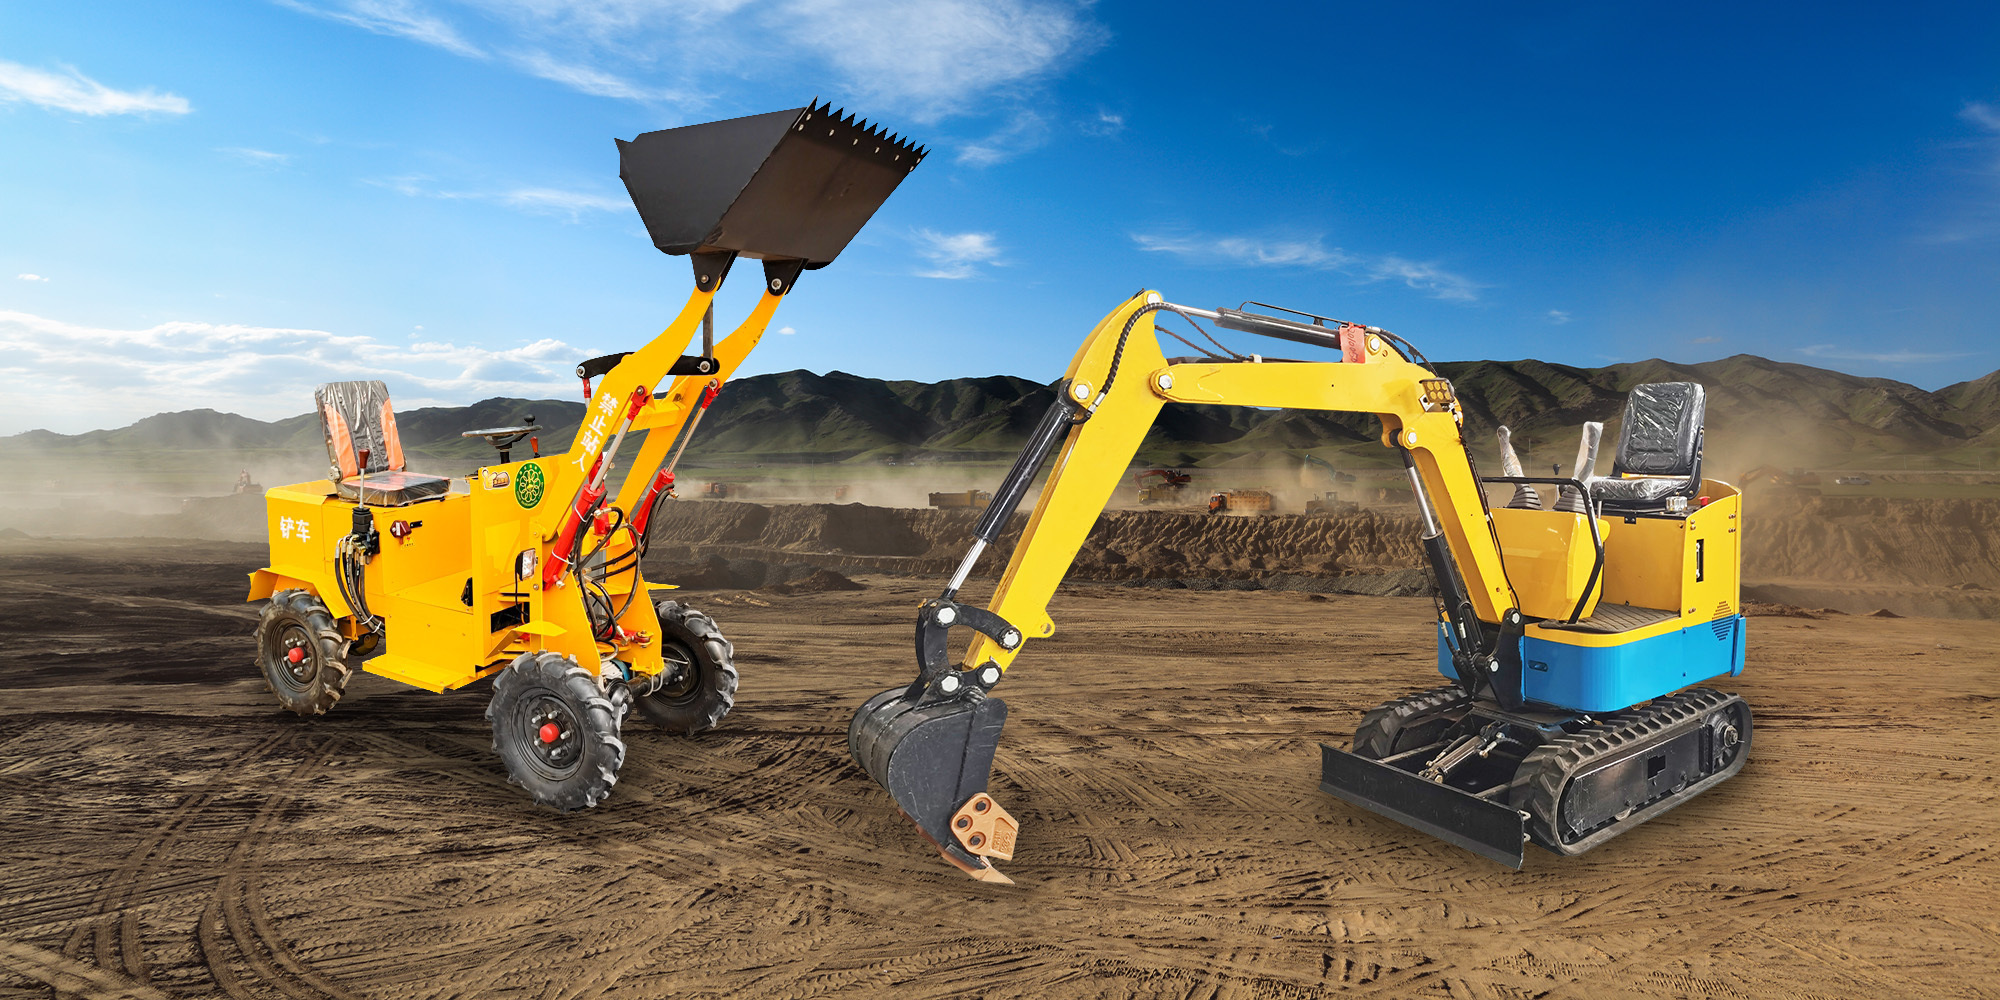 Steel Trencher Vehicle Toy Backhoe Excavator Construction Bucket Moveable Scoop 